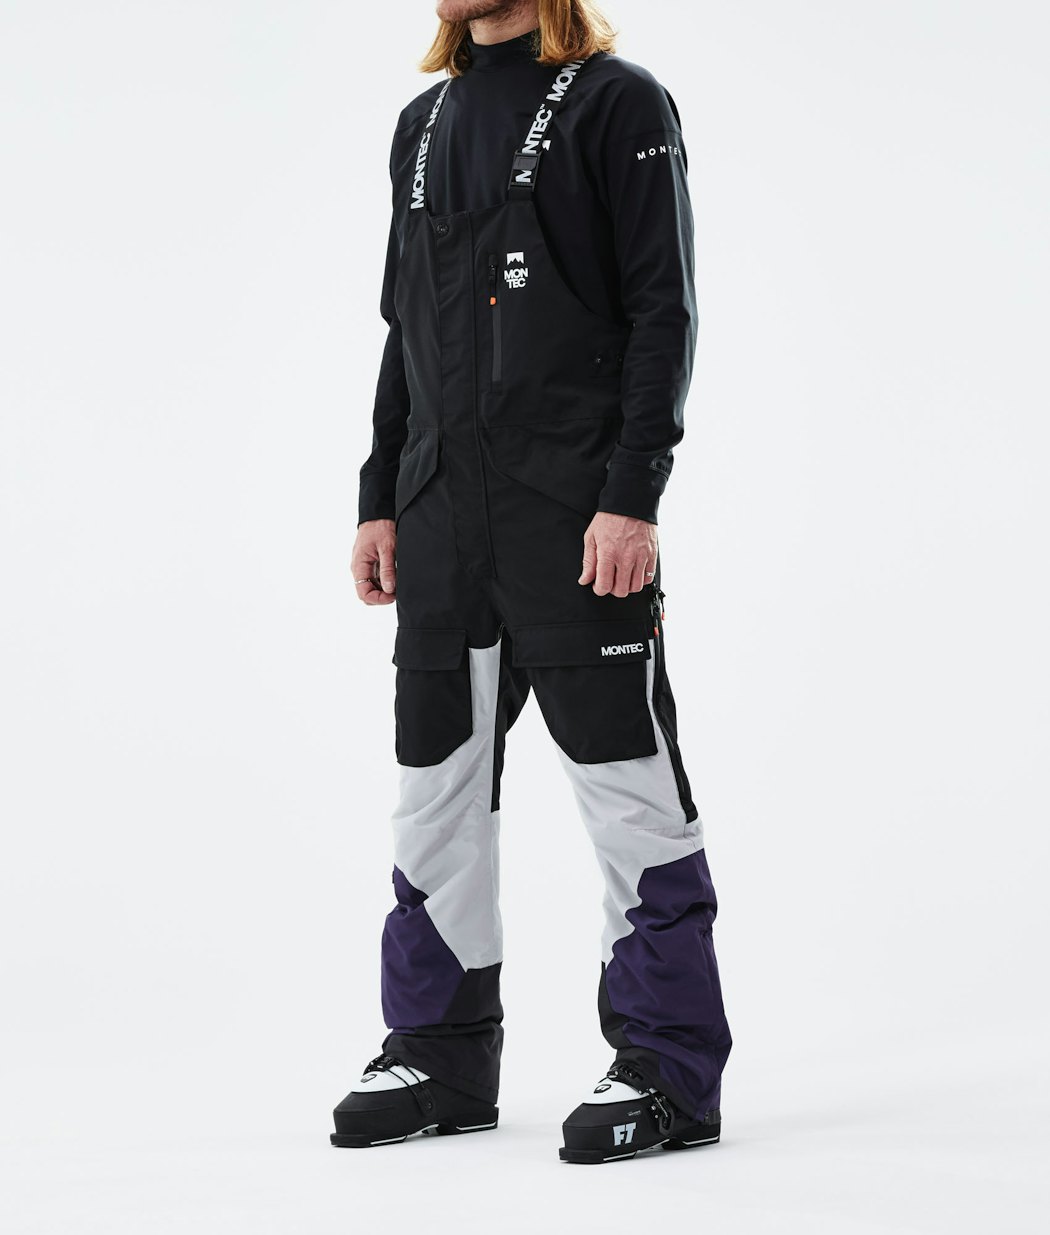 Montec Fawk 2021 Men's Ski Pants Black/Light Grey/Purple